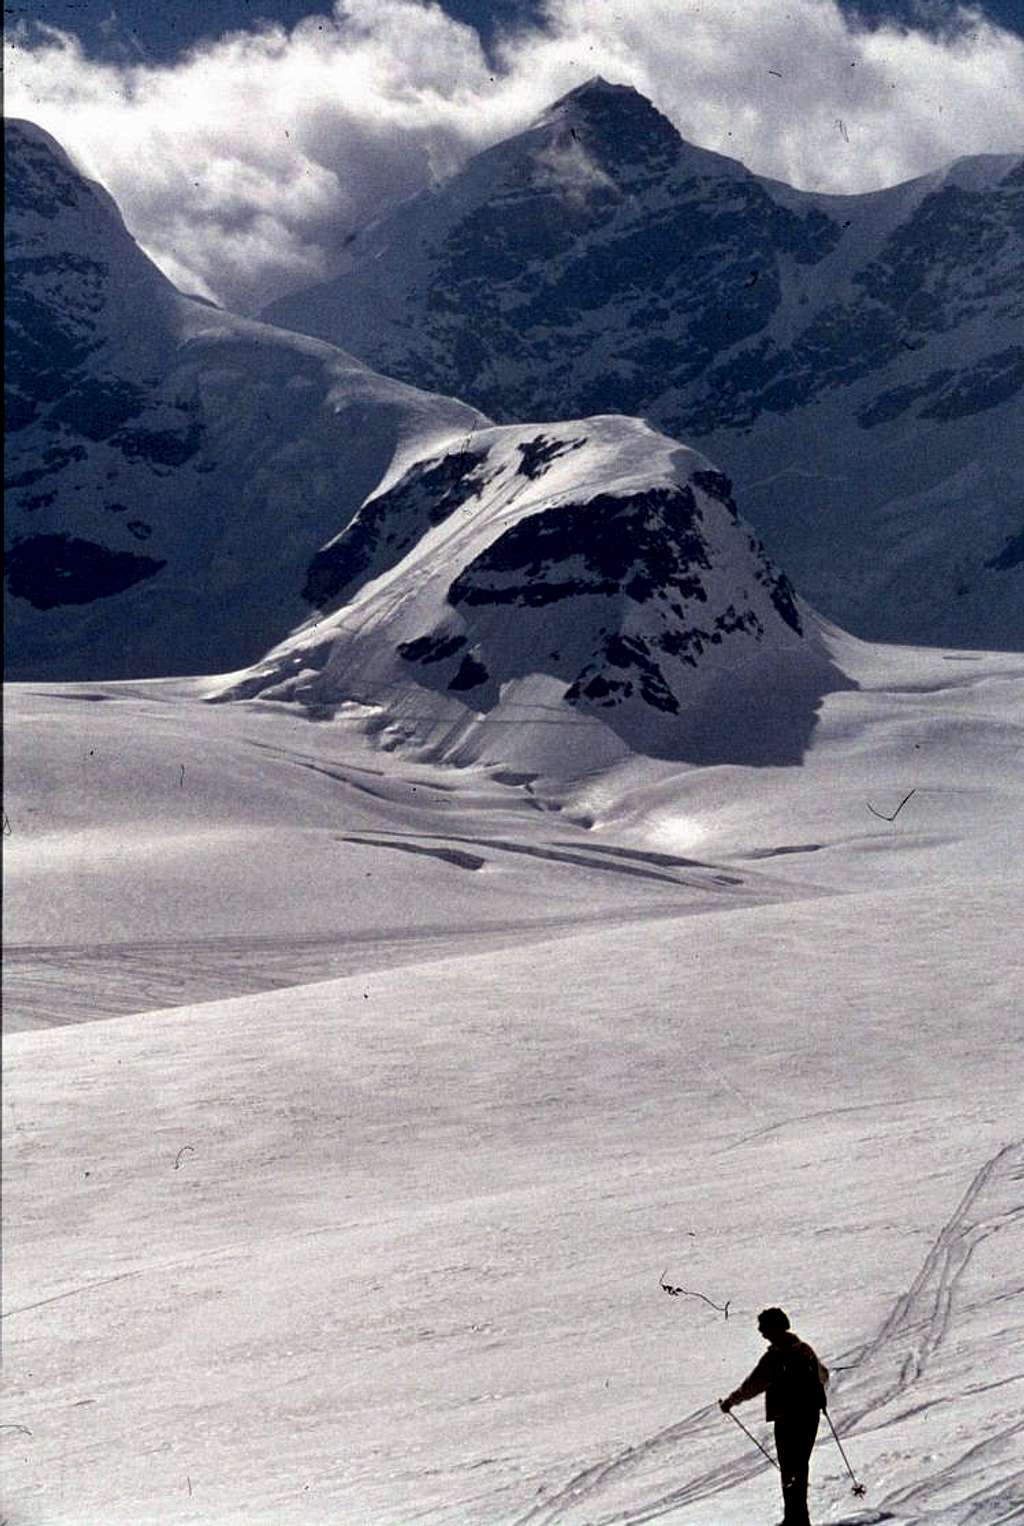 One Jungfrau above and one below